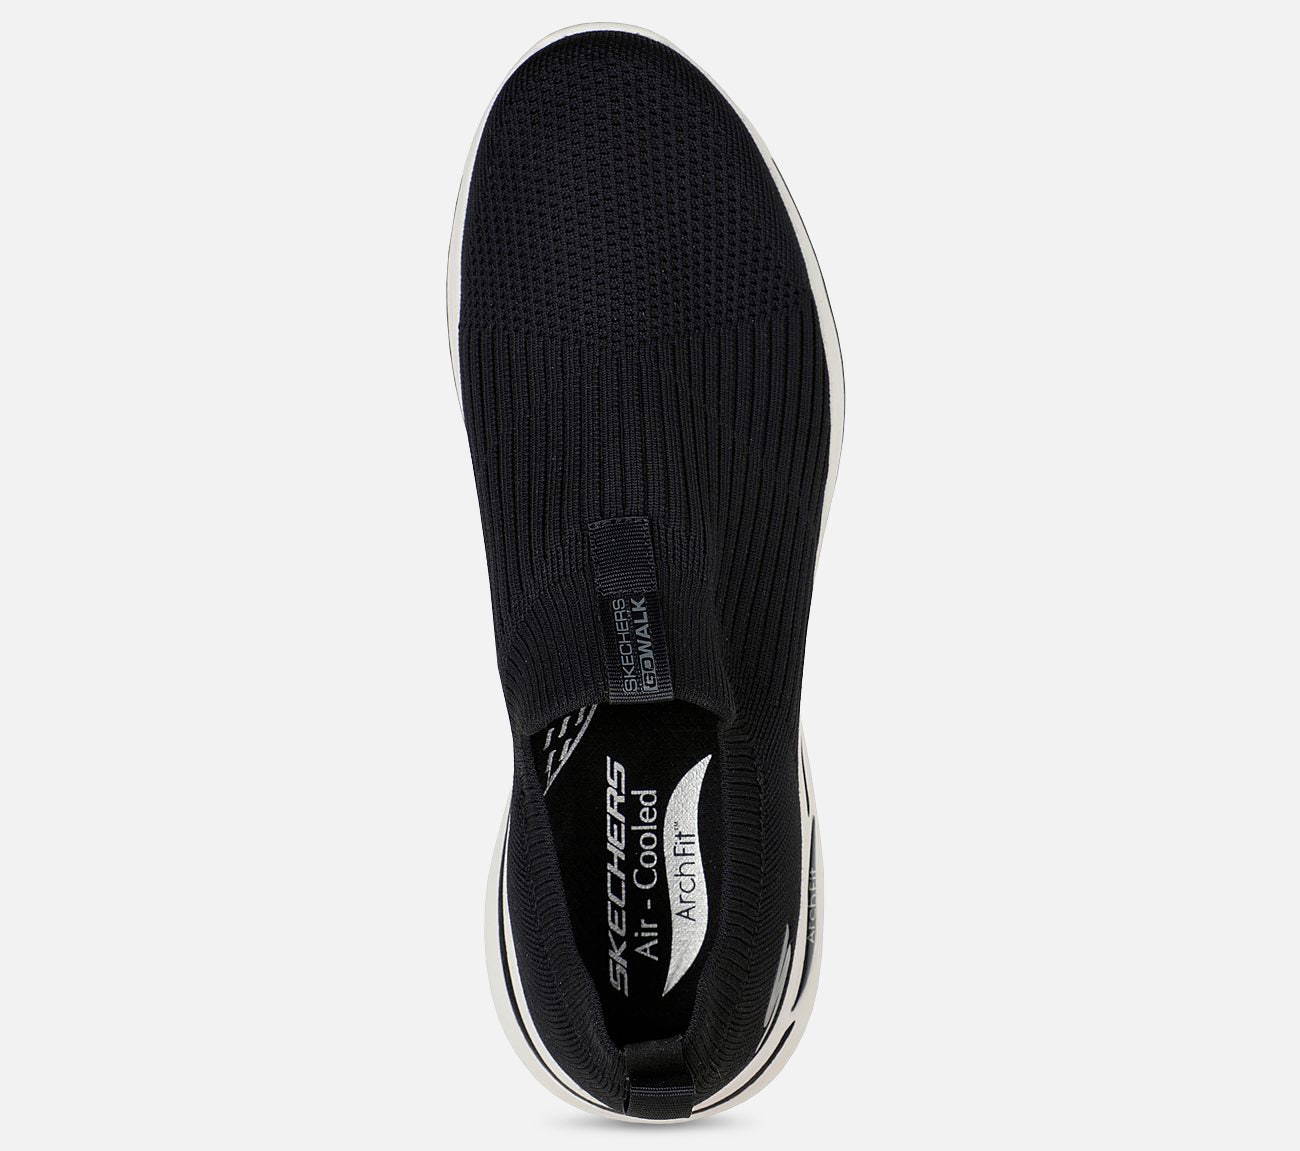 GO WALK Arch Fit - Iconic Shoe Skechers